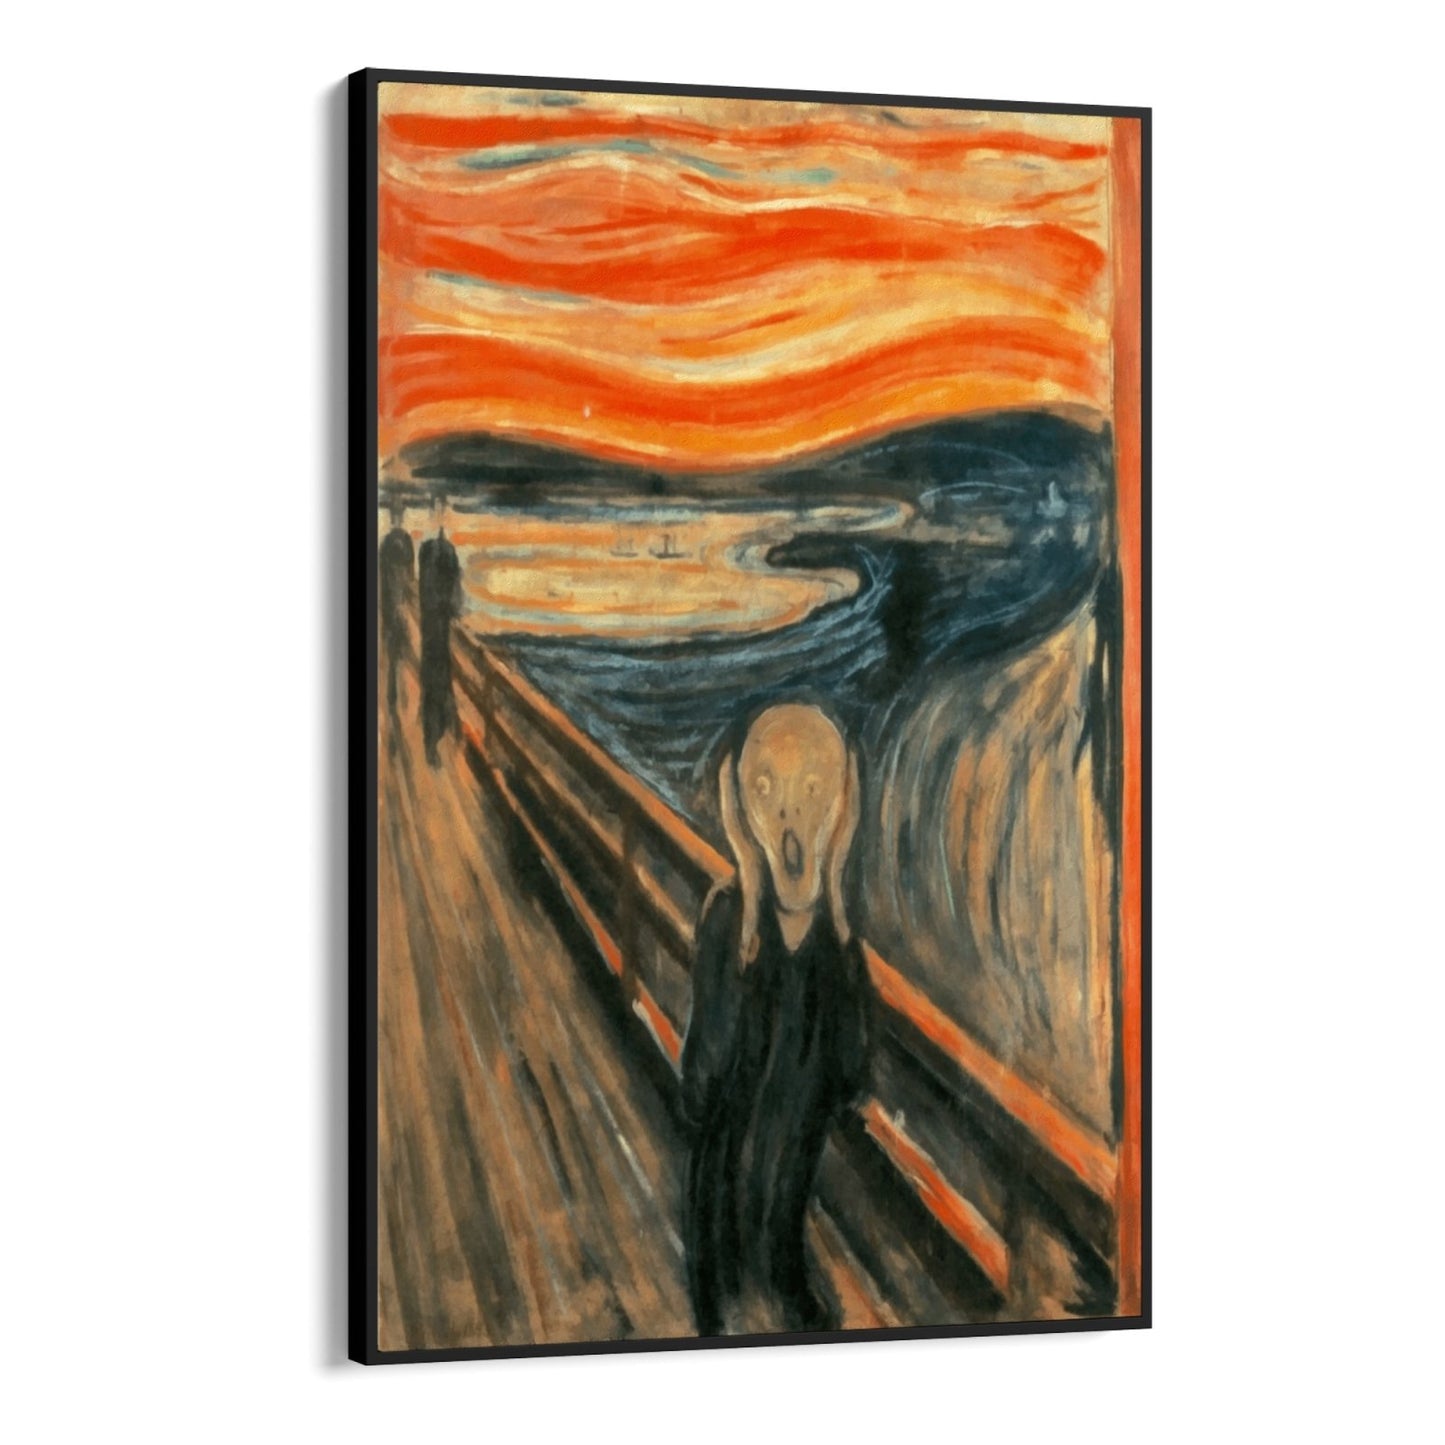 L'urlo – Edvard Munch